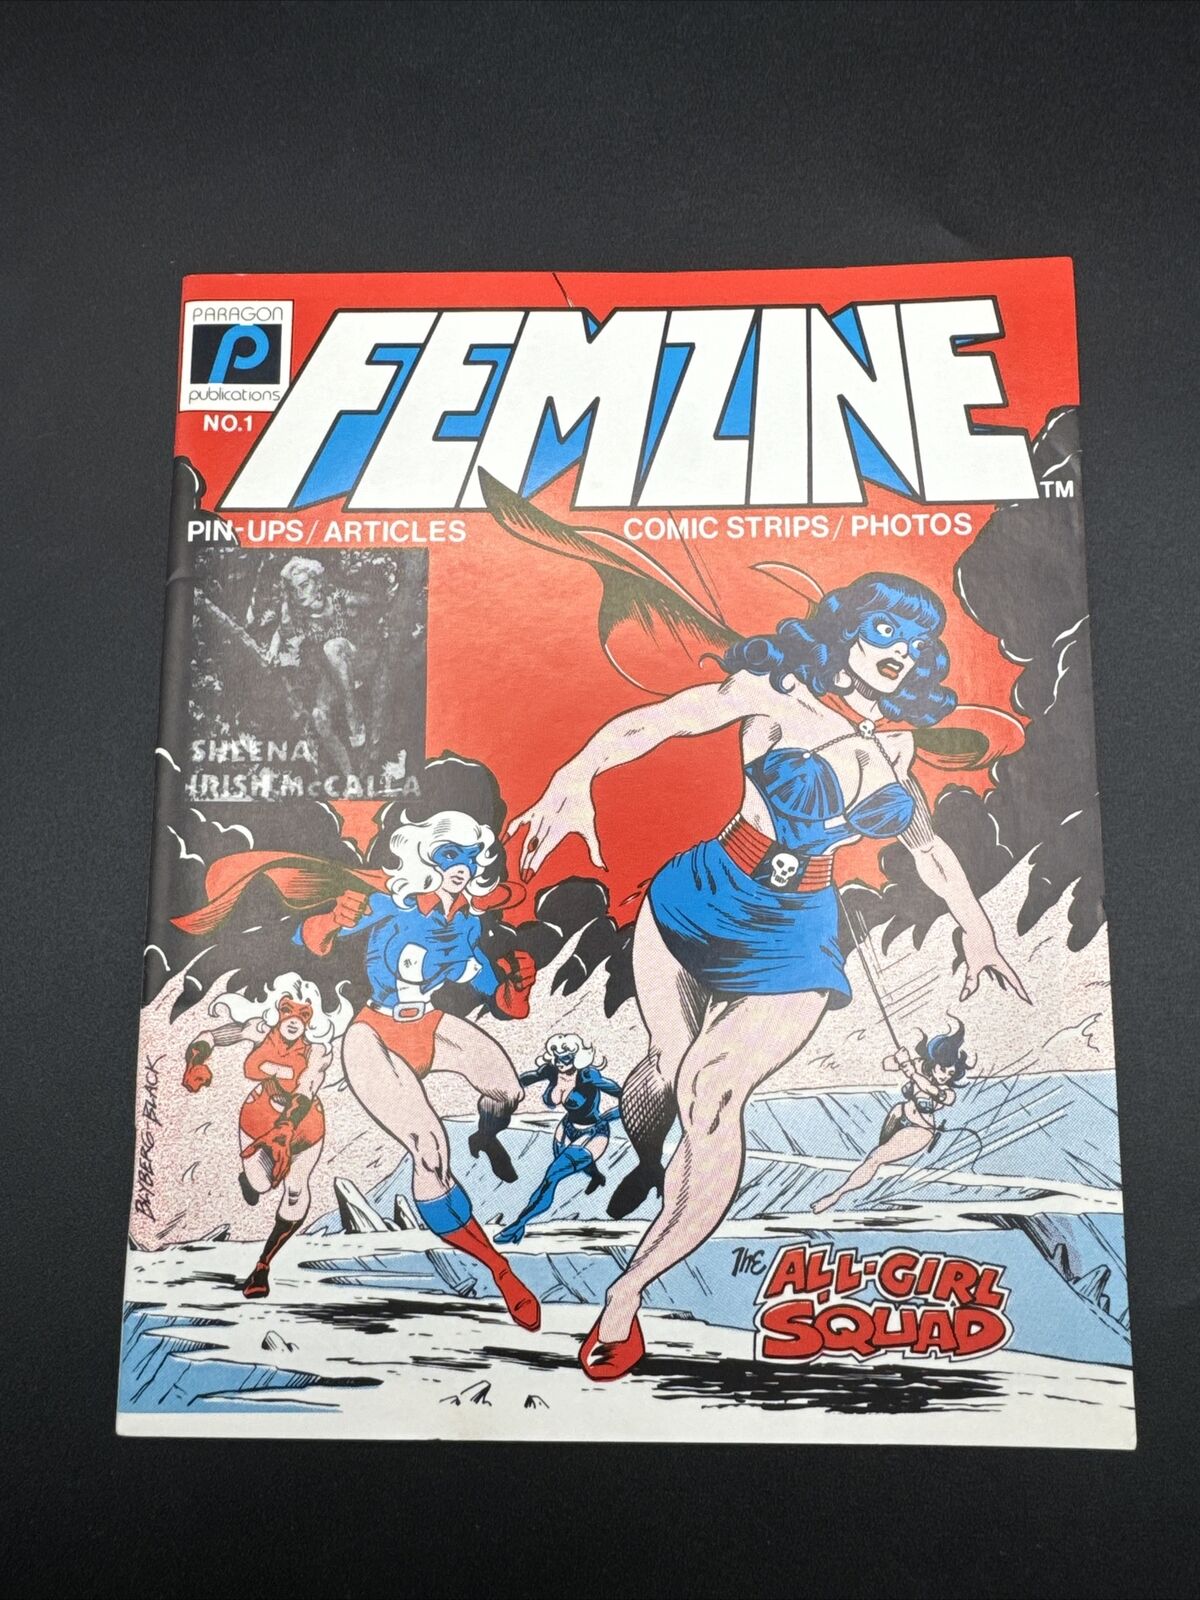 Femzine #1 - 1981 - Bill Black Art - 1st Appearance Femforce - RARE Fanzine -